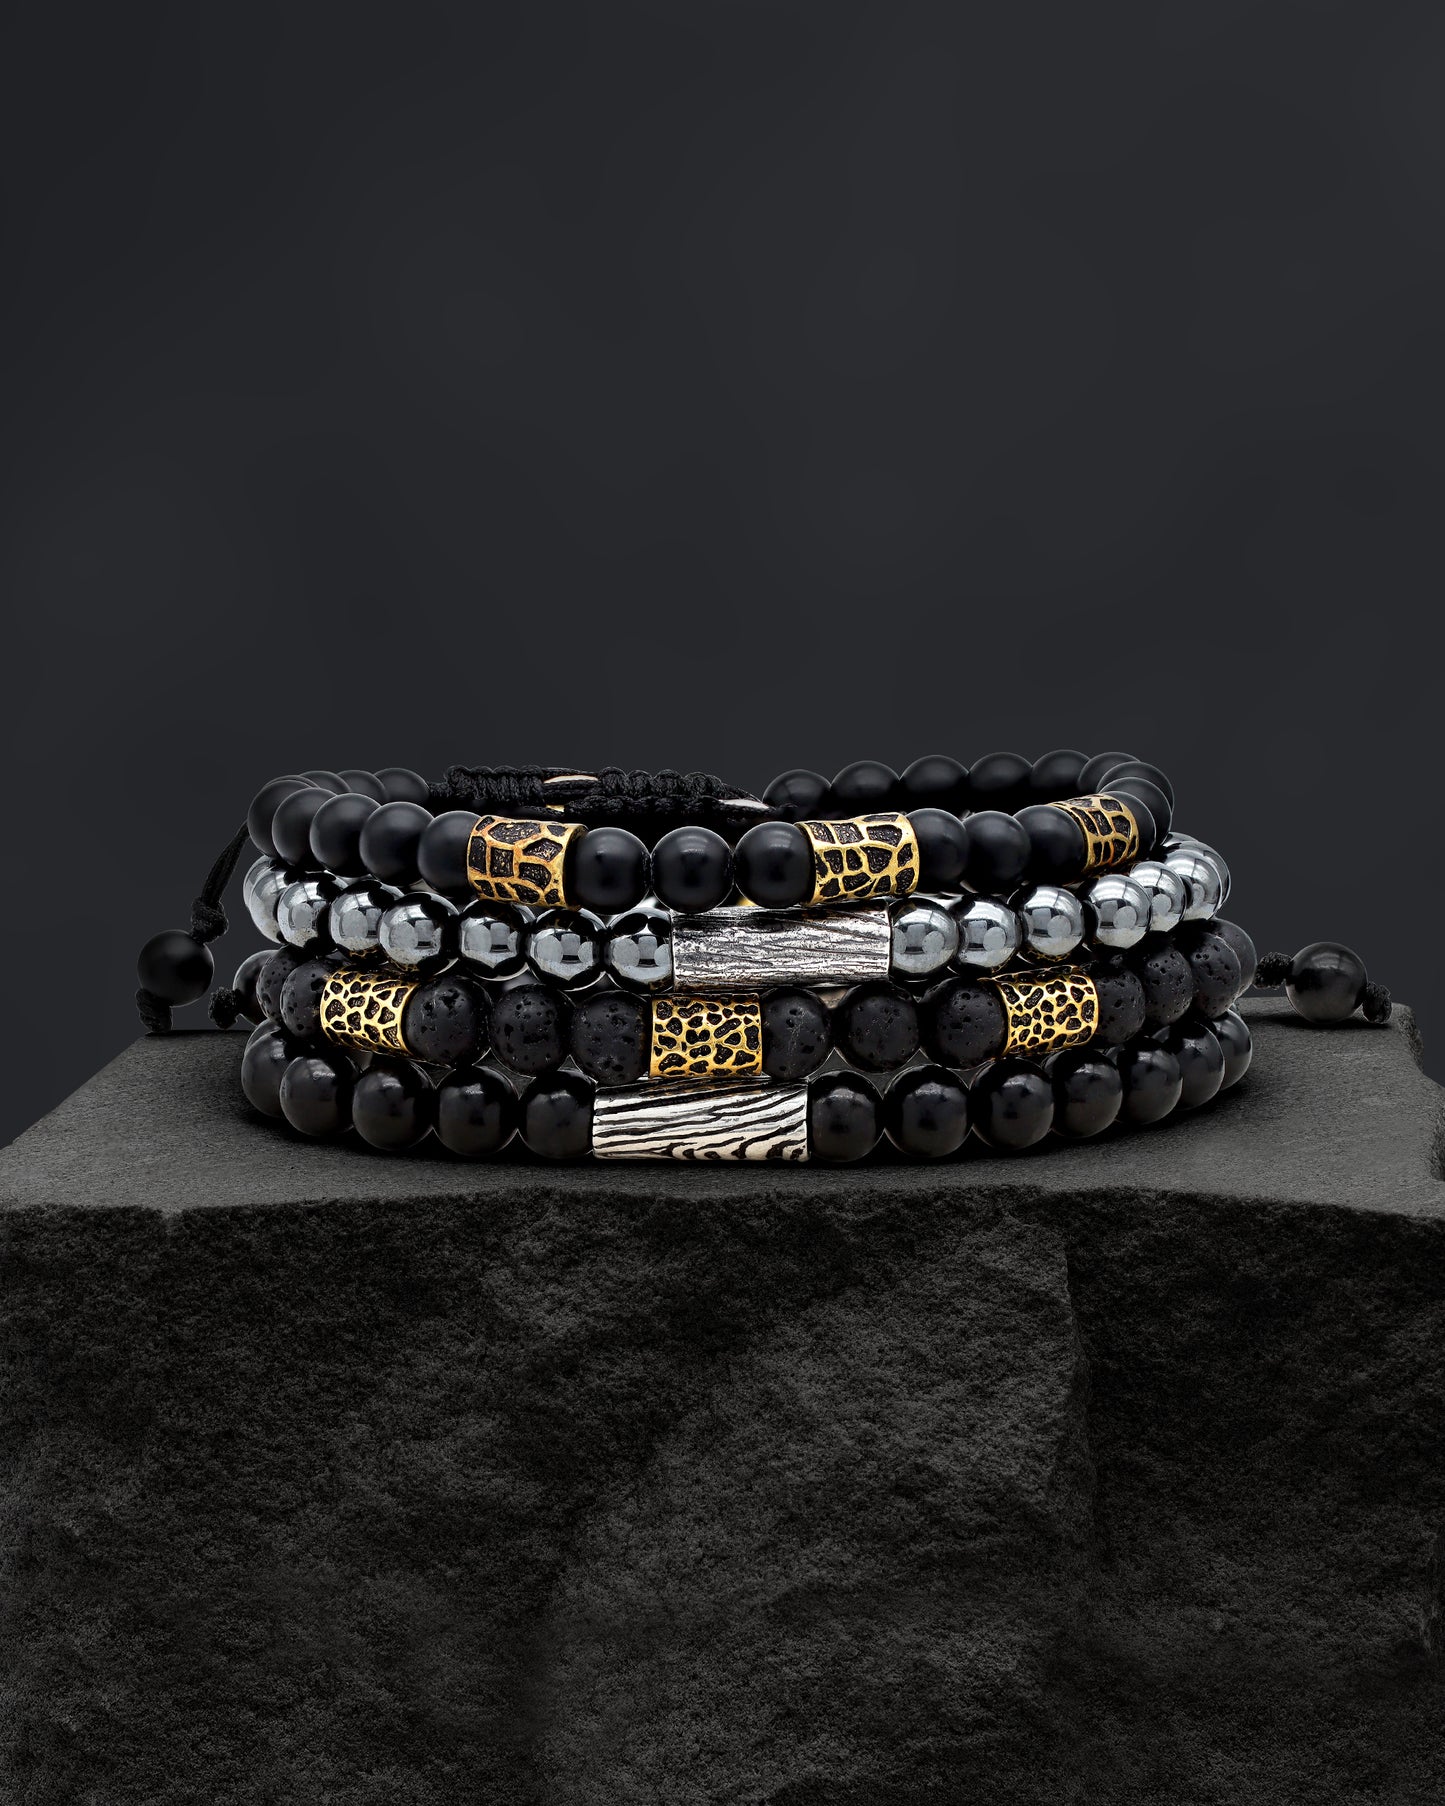 Leopard Lava Stone Adjustable Bracelet (Strength and Confidence)